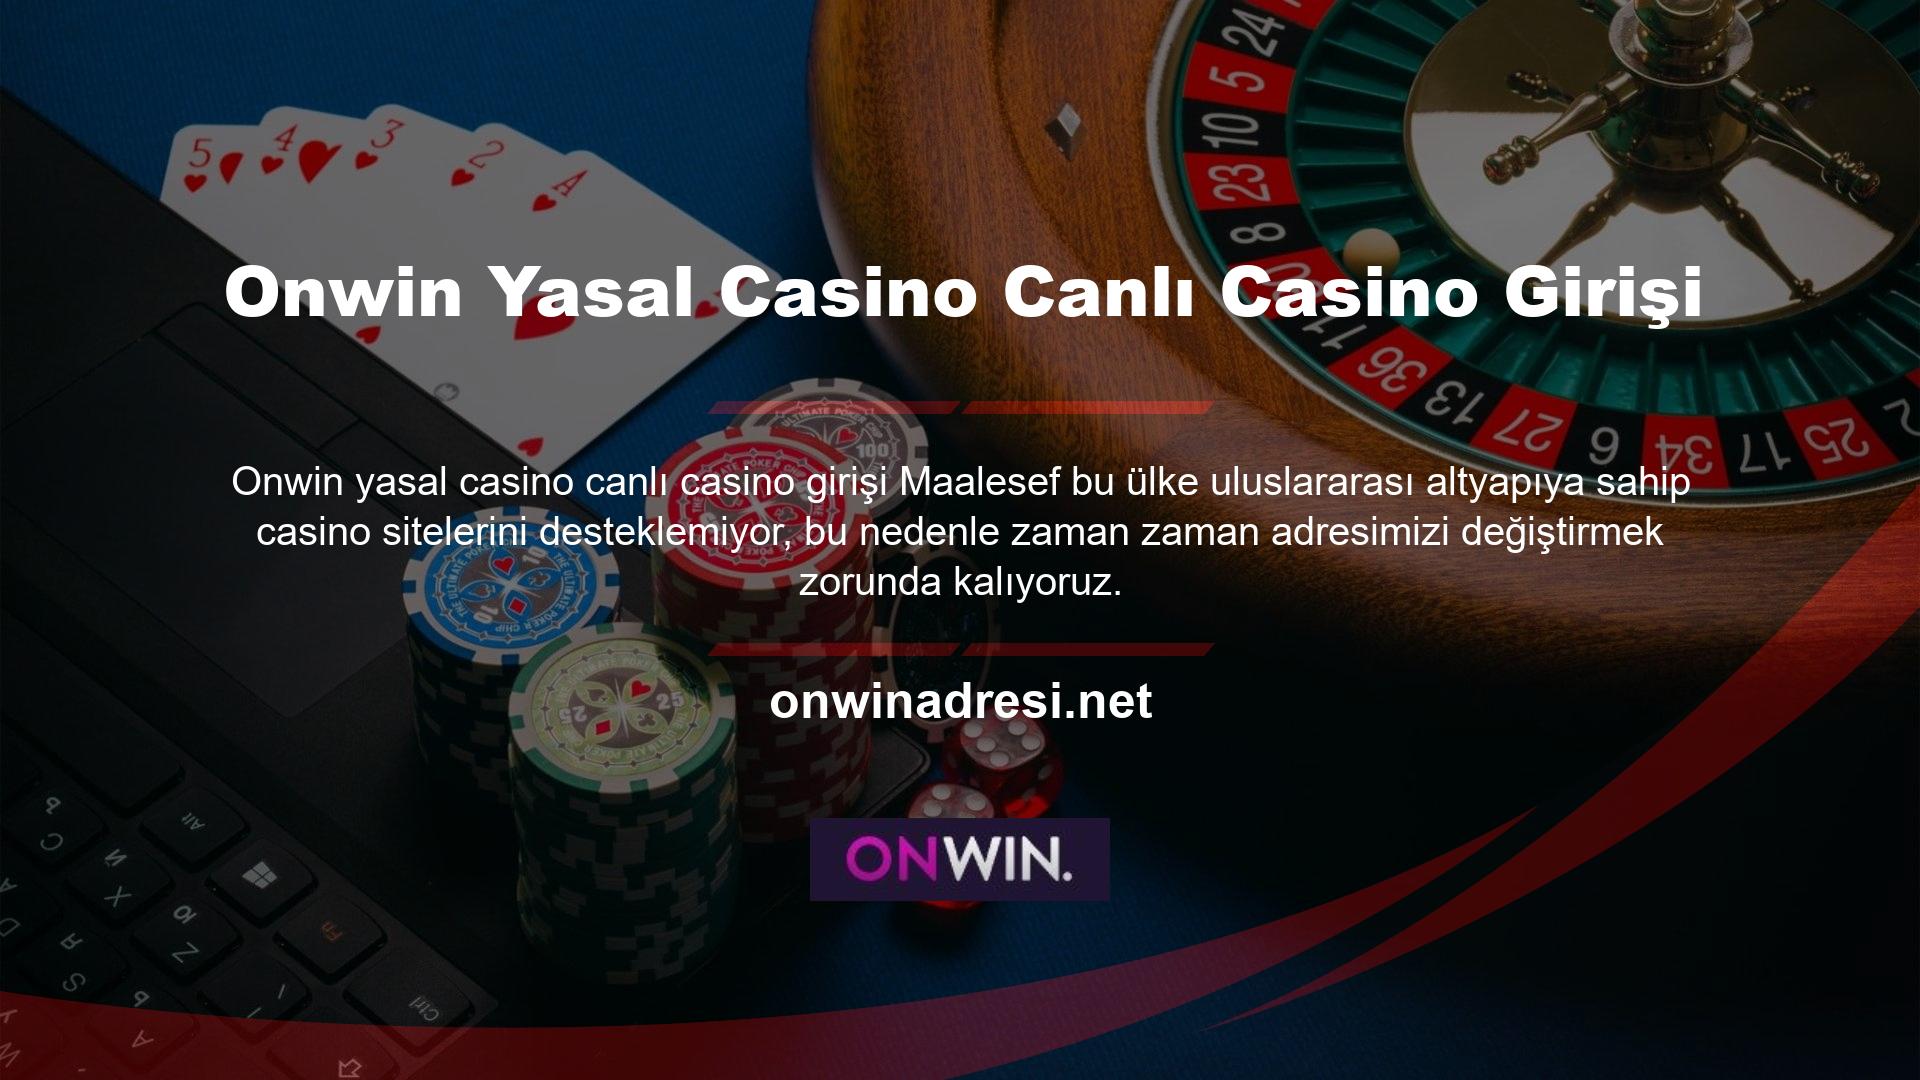 Onwin yasal casino canlı casino girişi